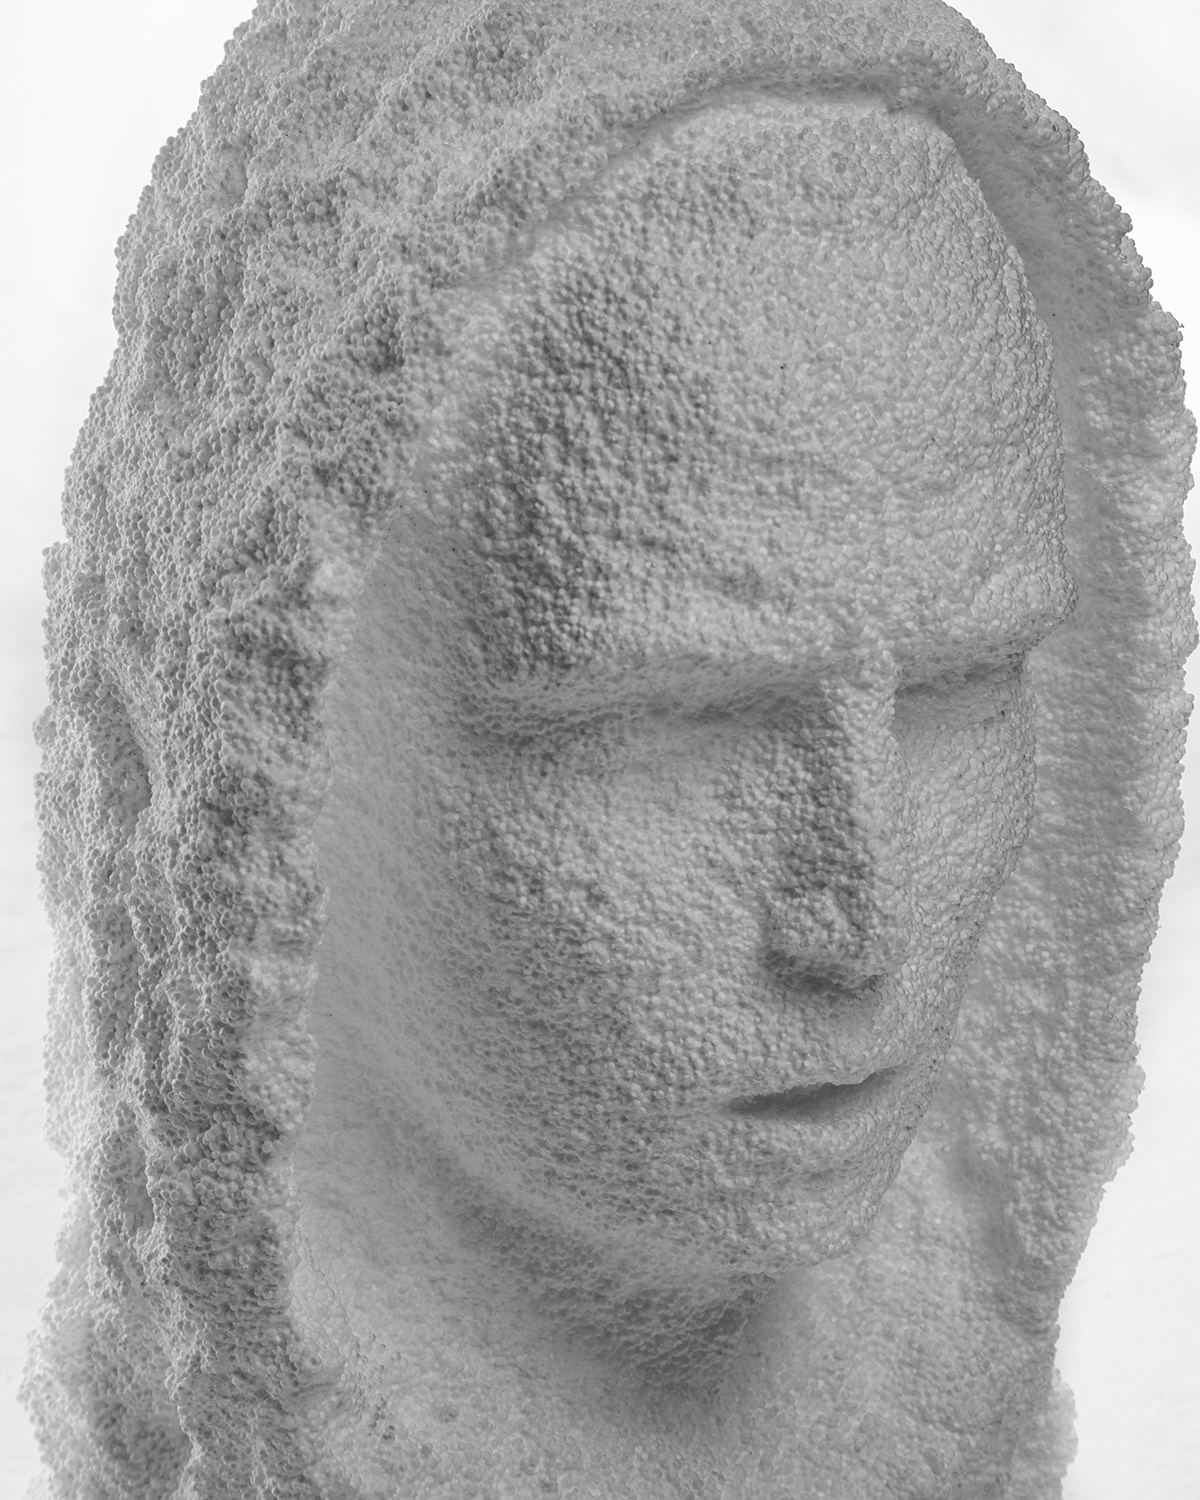 Sculpture portrait of Jessie Pinkman in styrofoam